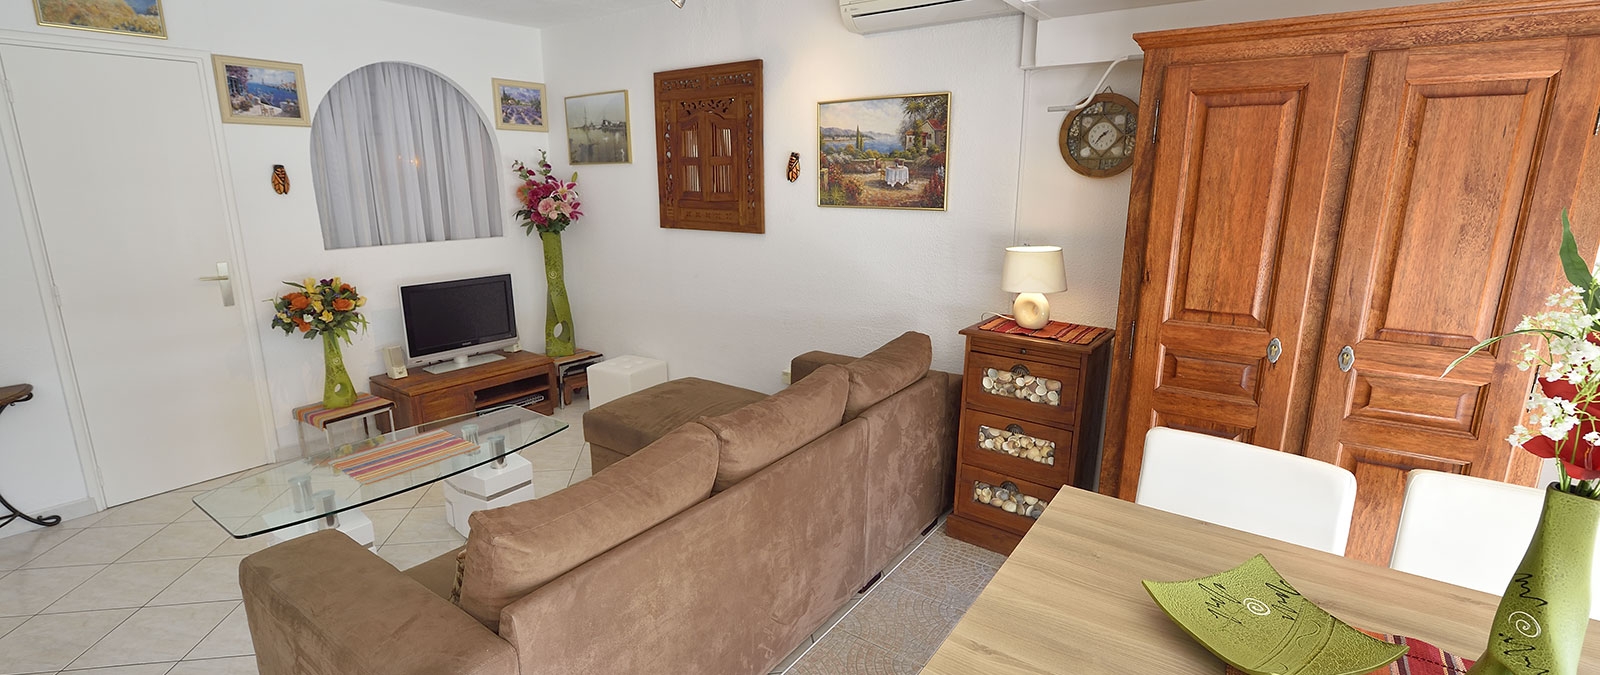 Lounge Sawadee libertine apartment rental